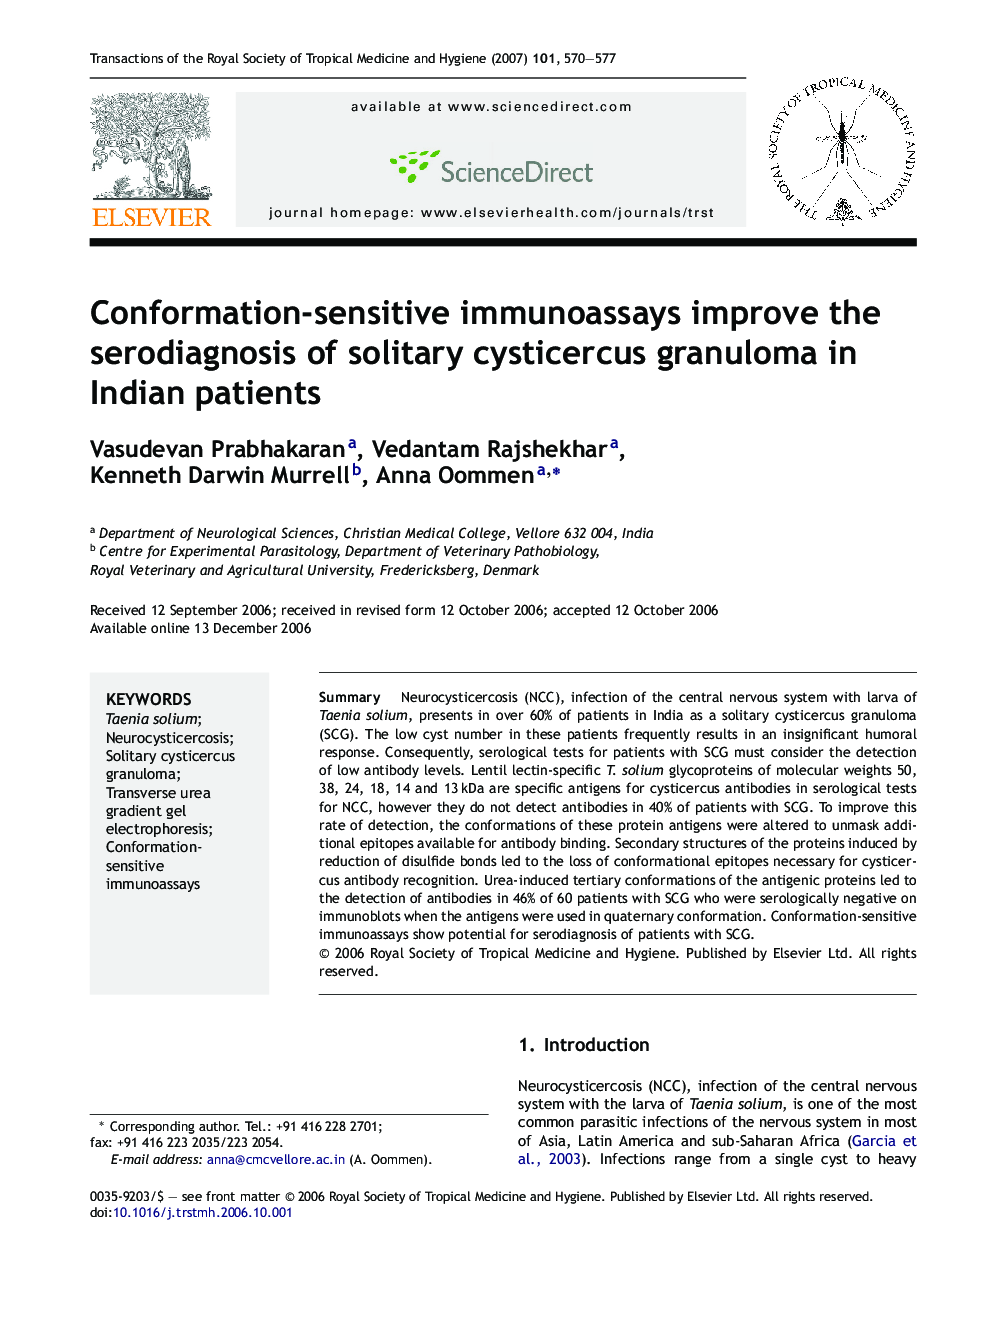 Conformation-sensitive immunoassays improve the serodiagnosis of solitary cysticercus granuloma in Indian patients